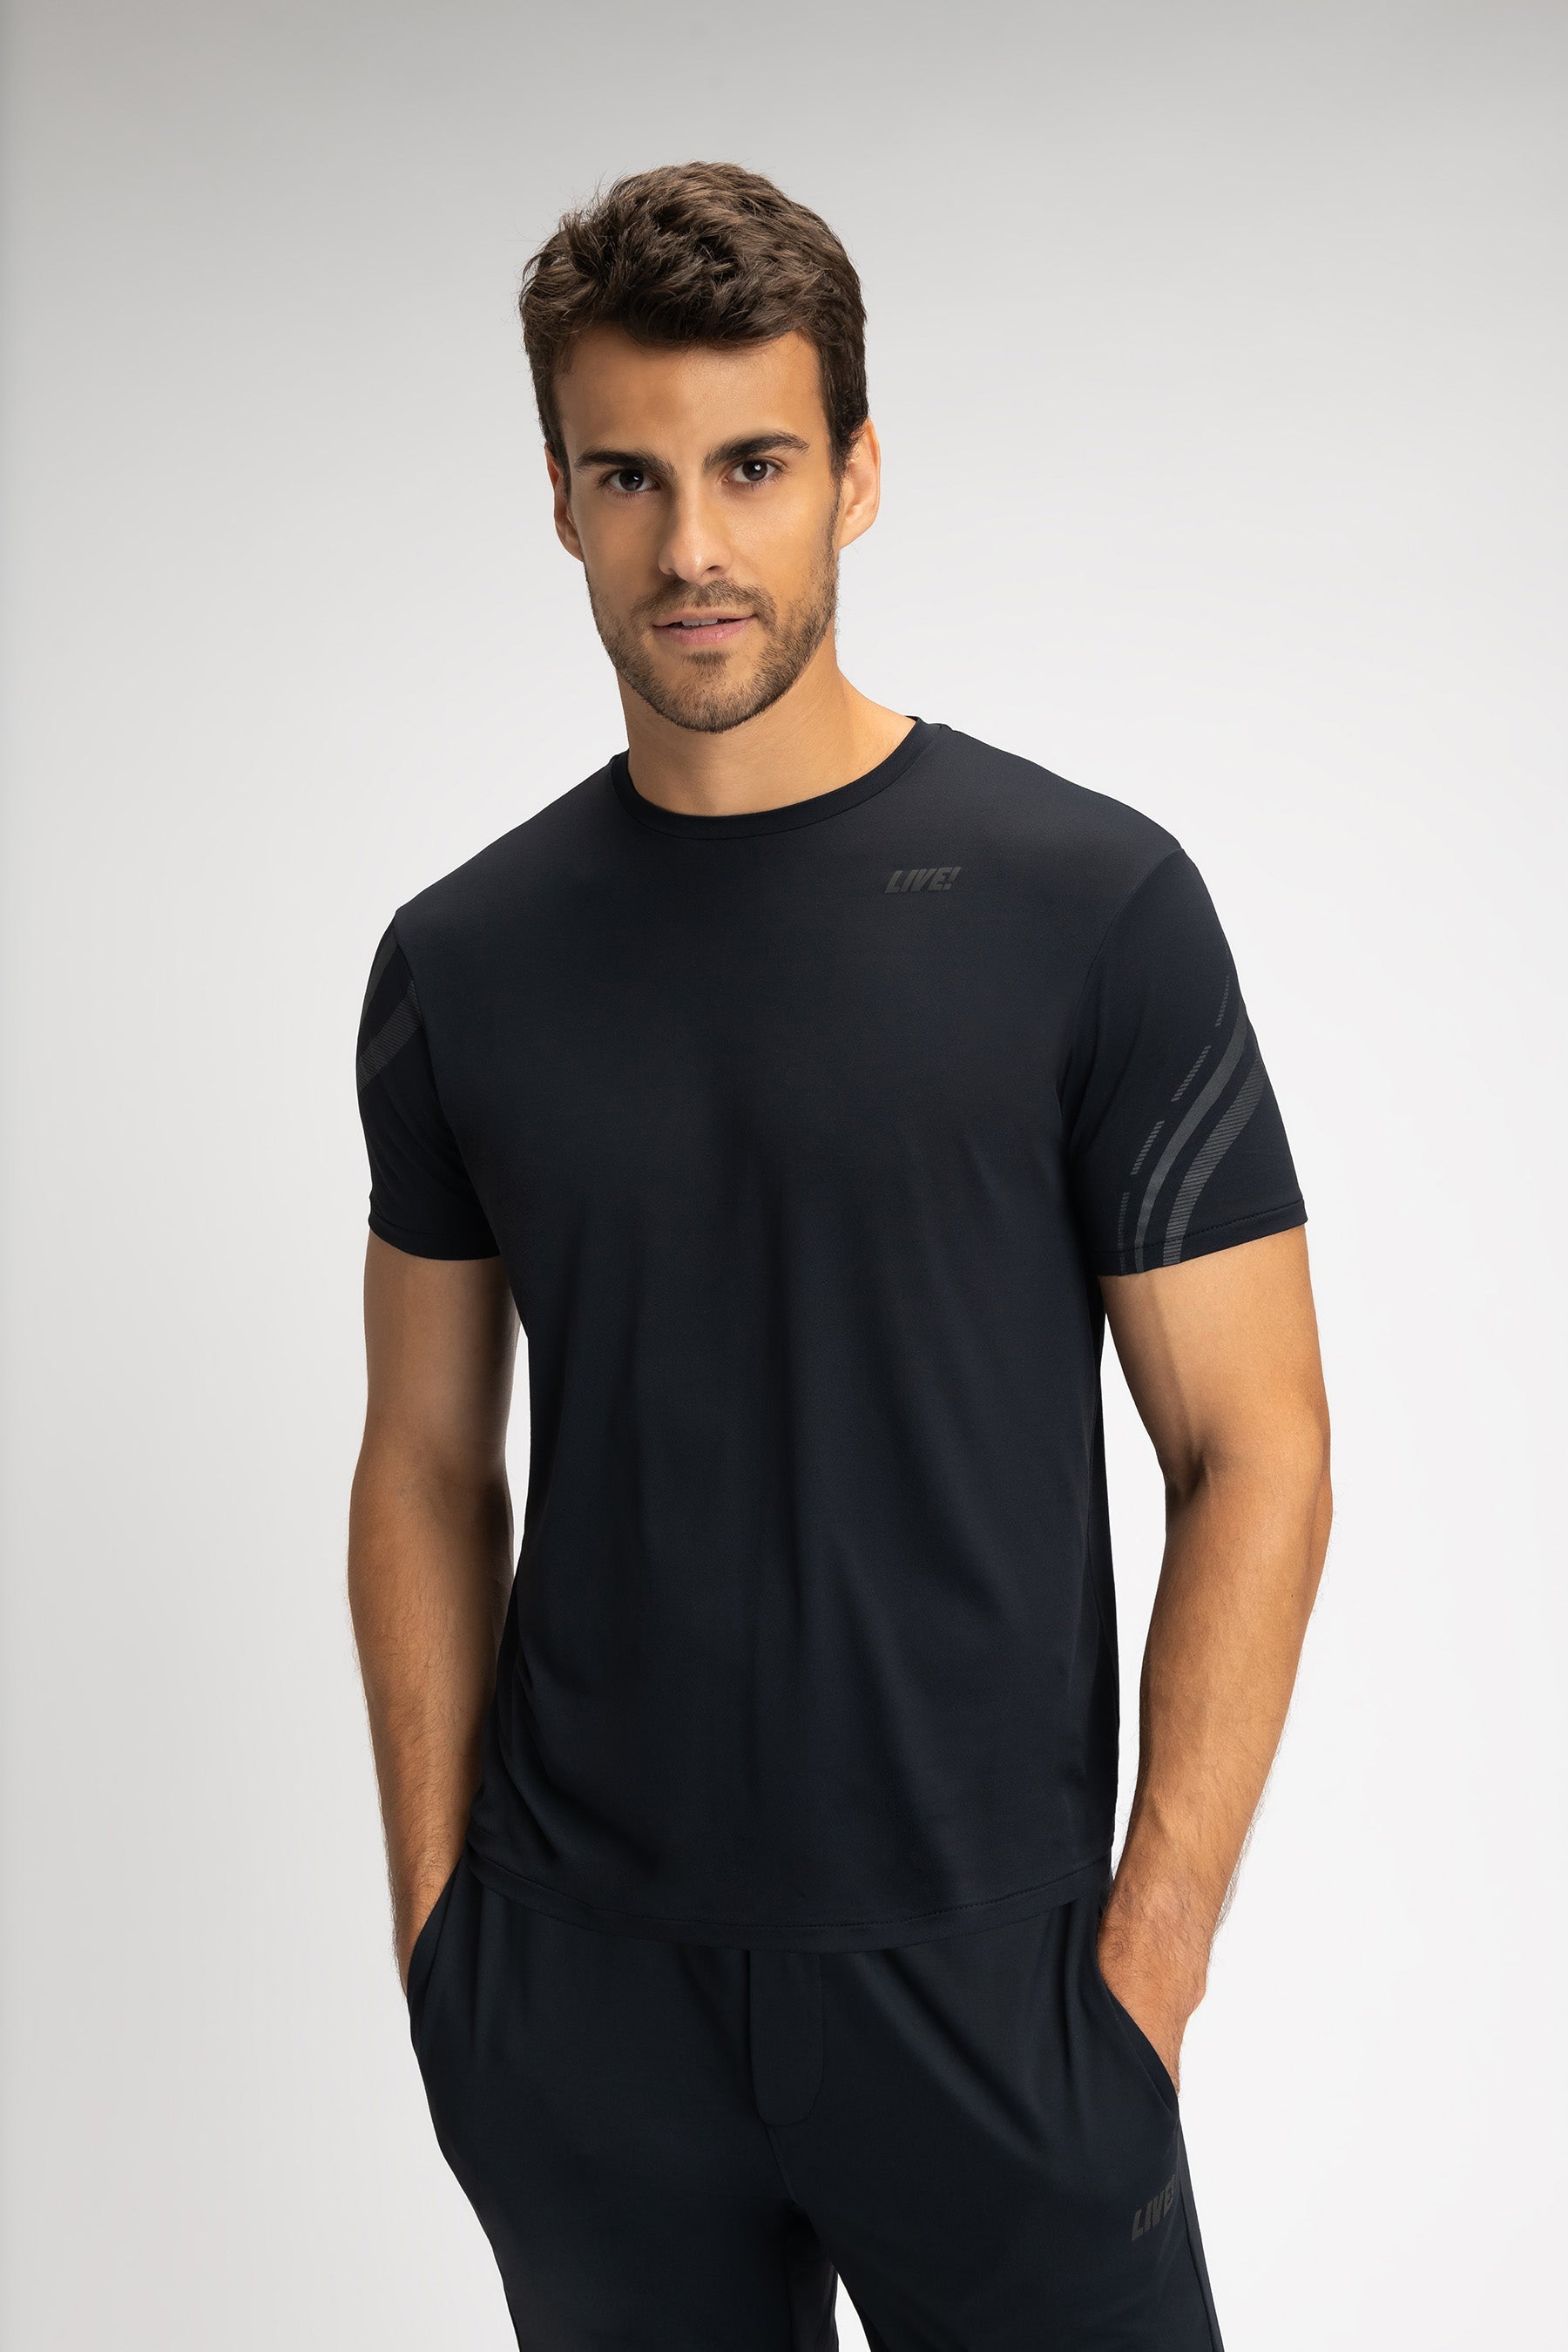 Adidas Climacool Boston Marathon Jersey Shirt - Men's Size XL